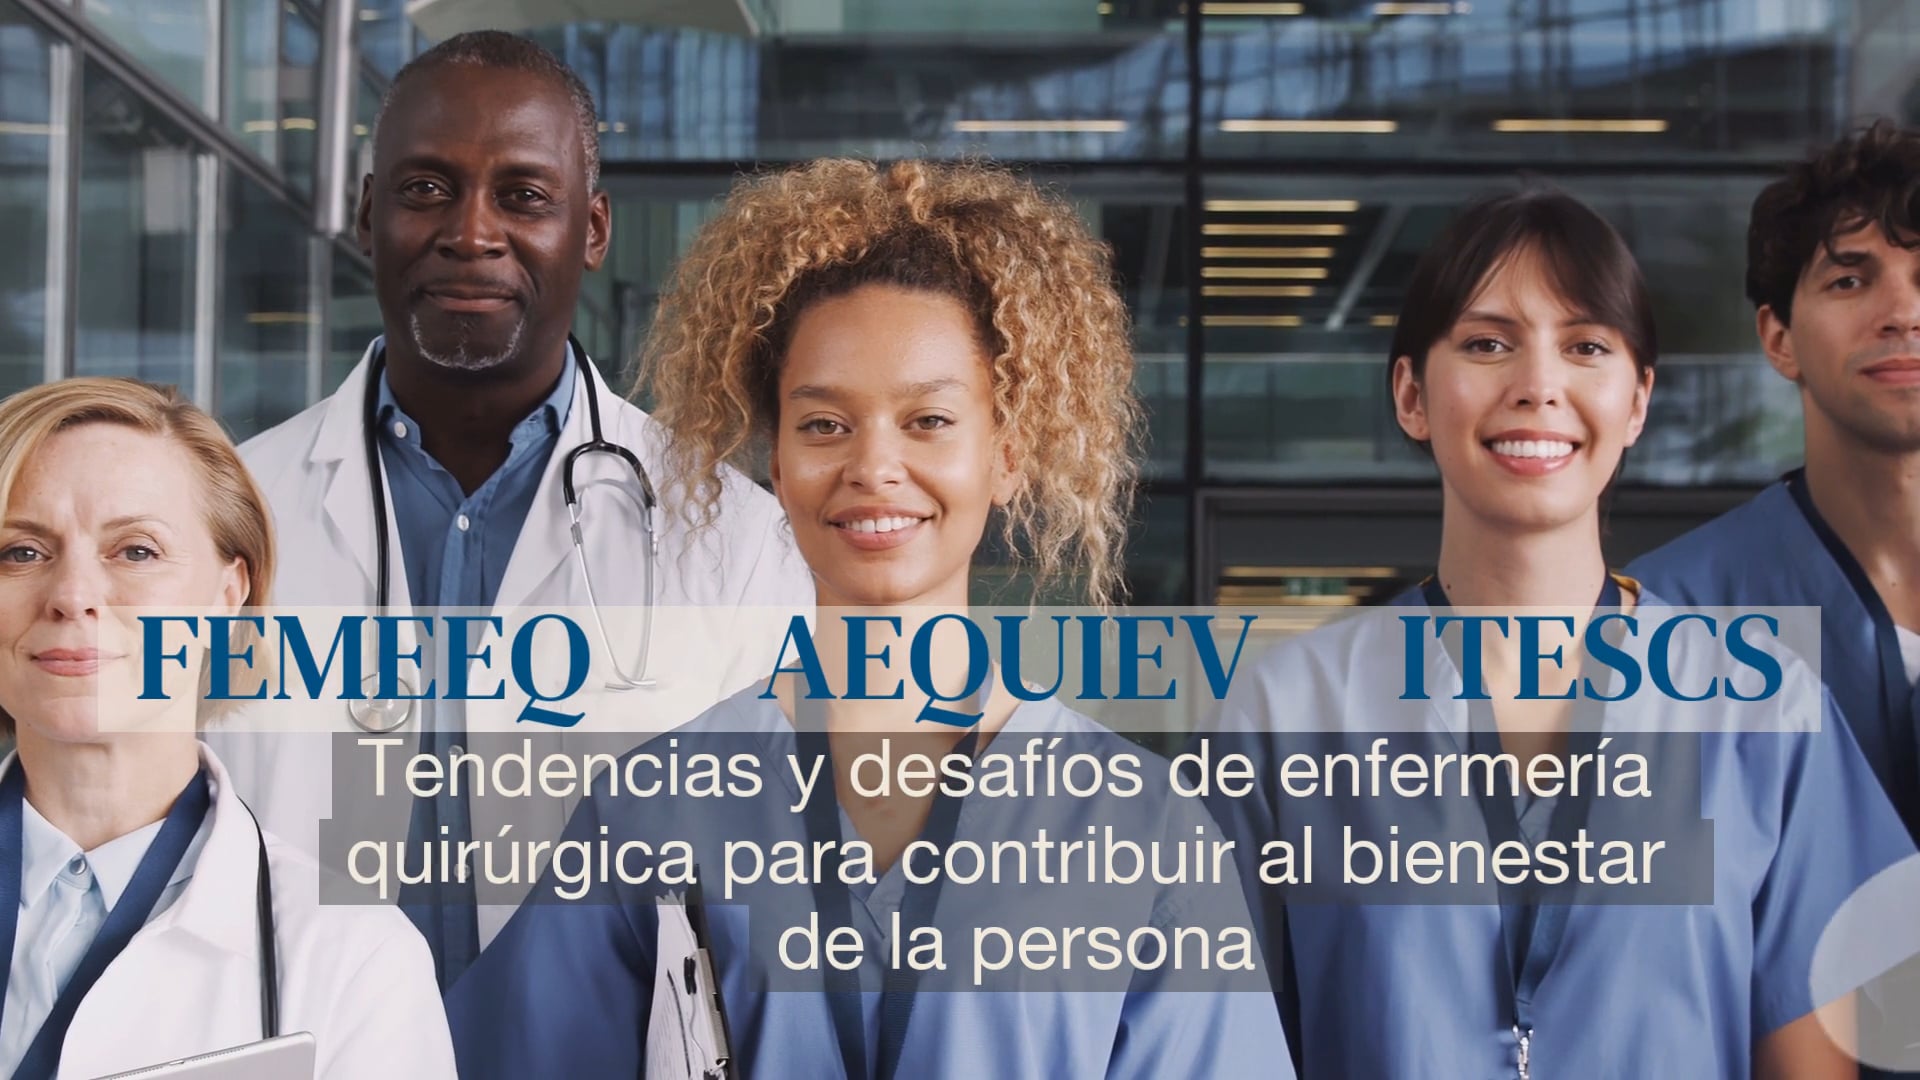 Watch Taller de curaciones - ASPID Pharma Online | Vimeo On Demand on Vimeo